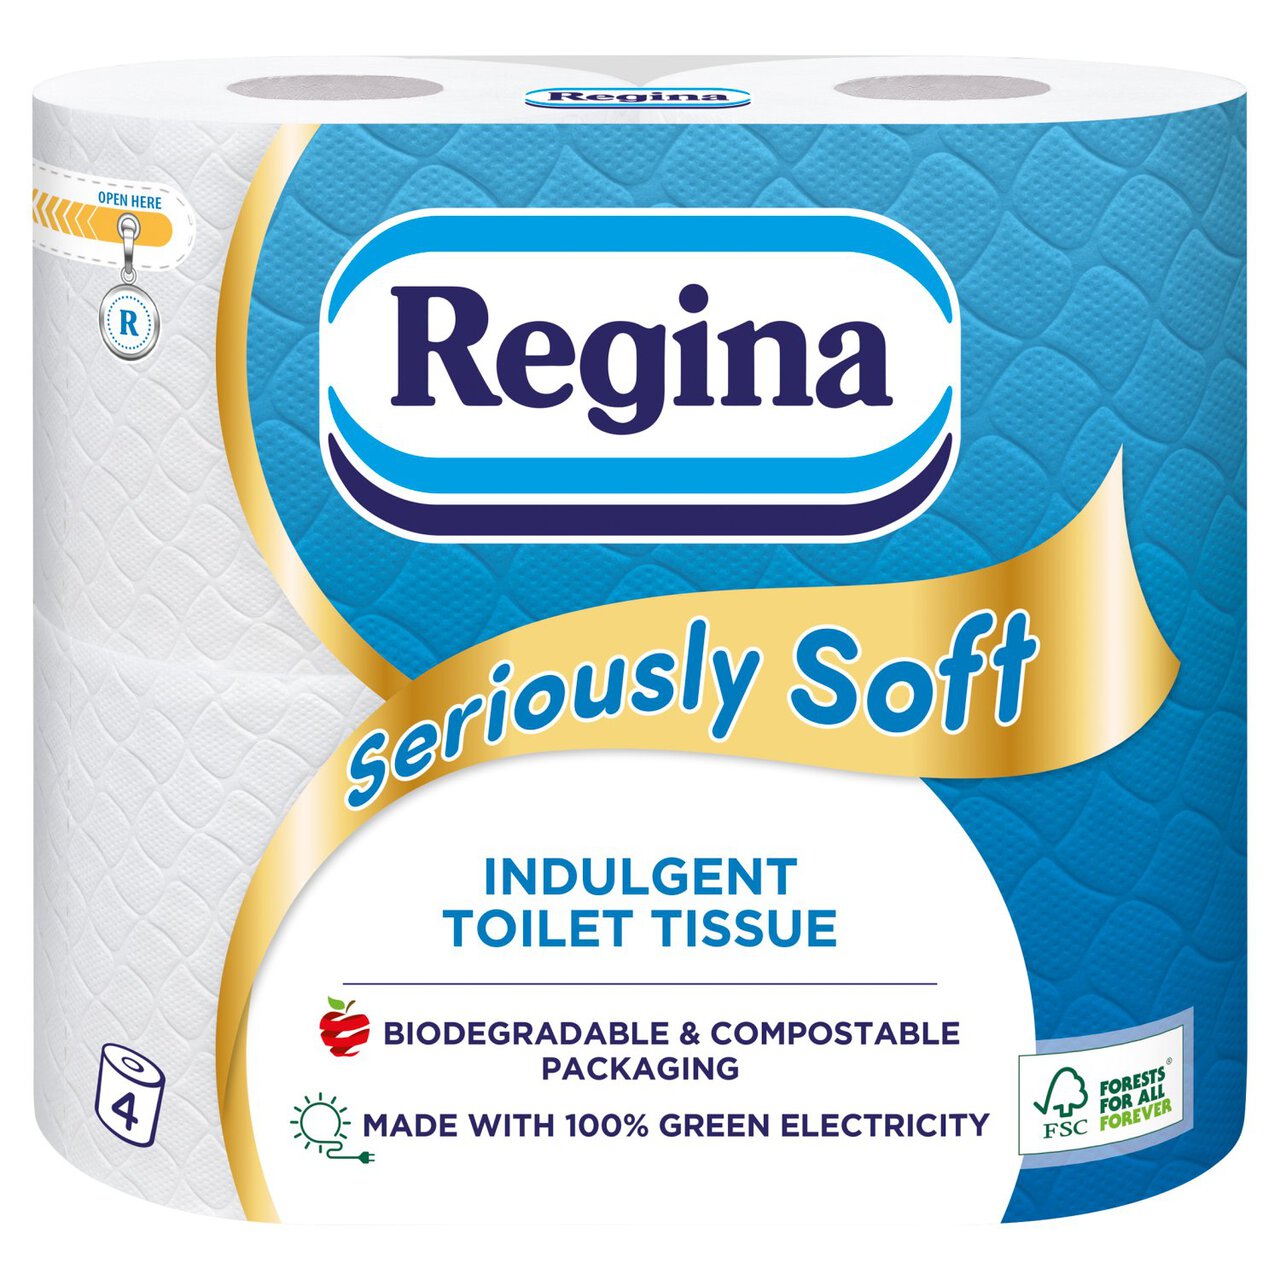 Regina Seriously Soft Toilet Tissue 4 per pack